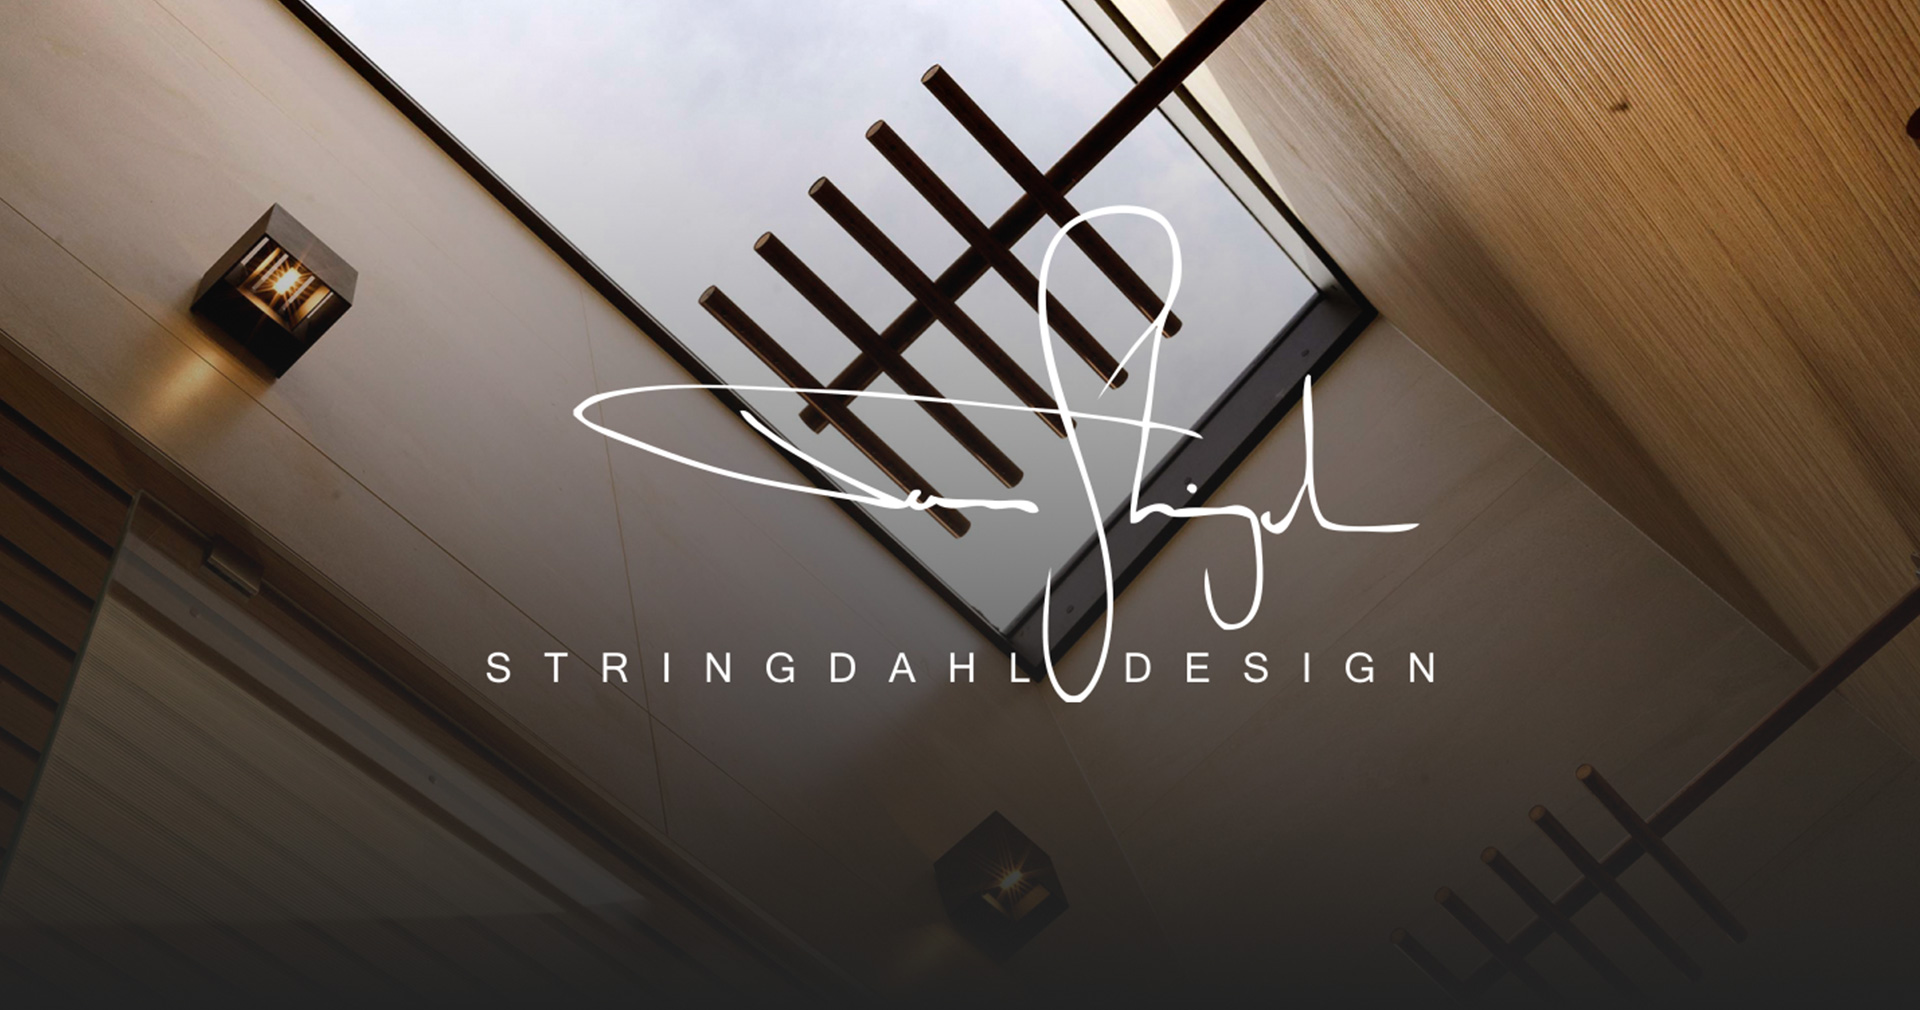 Stringdahl Design